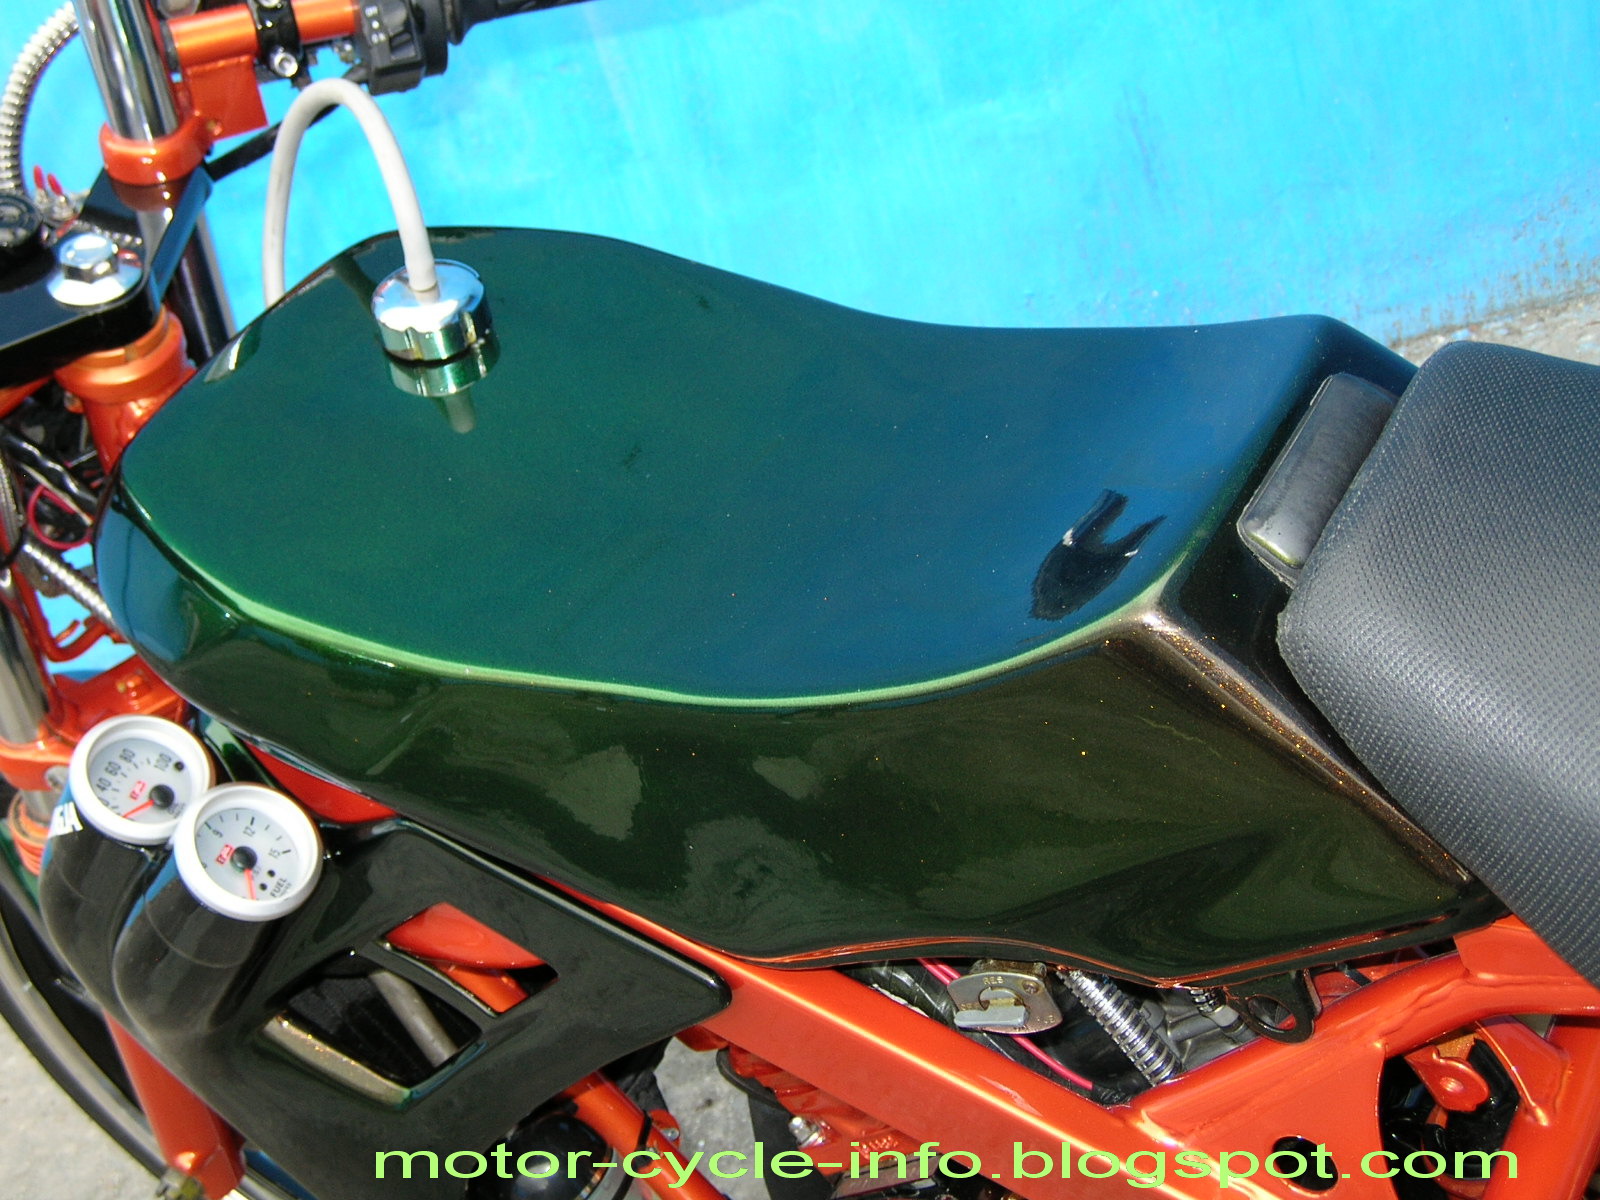 FREE MOTORCYCLE DESIGN Gambar Kawasaki Ninja Modif Extreme Jogja